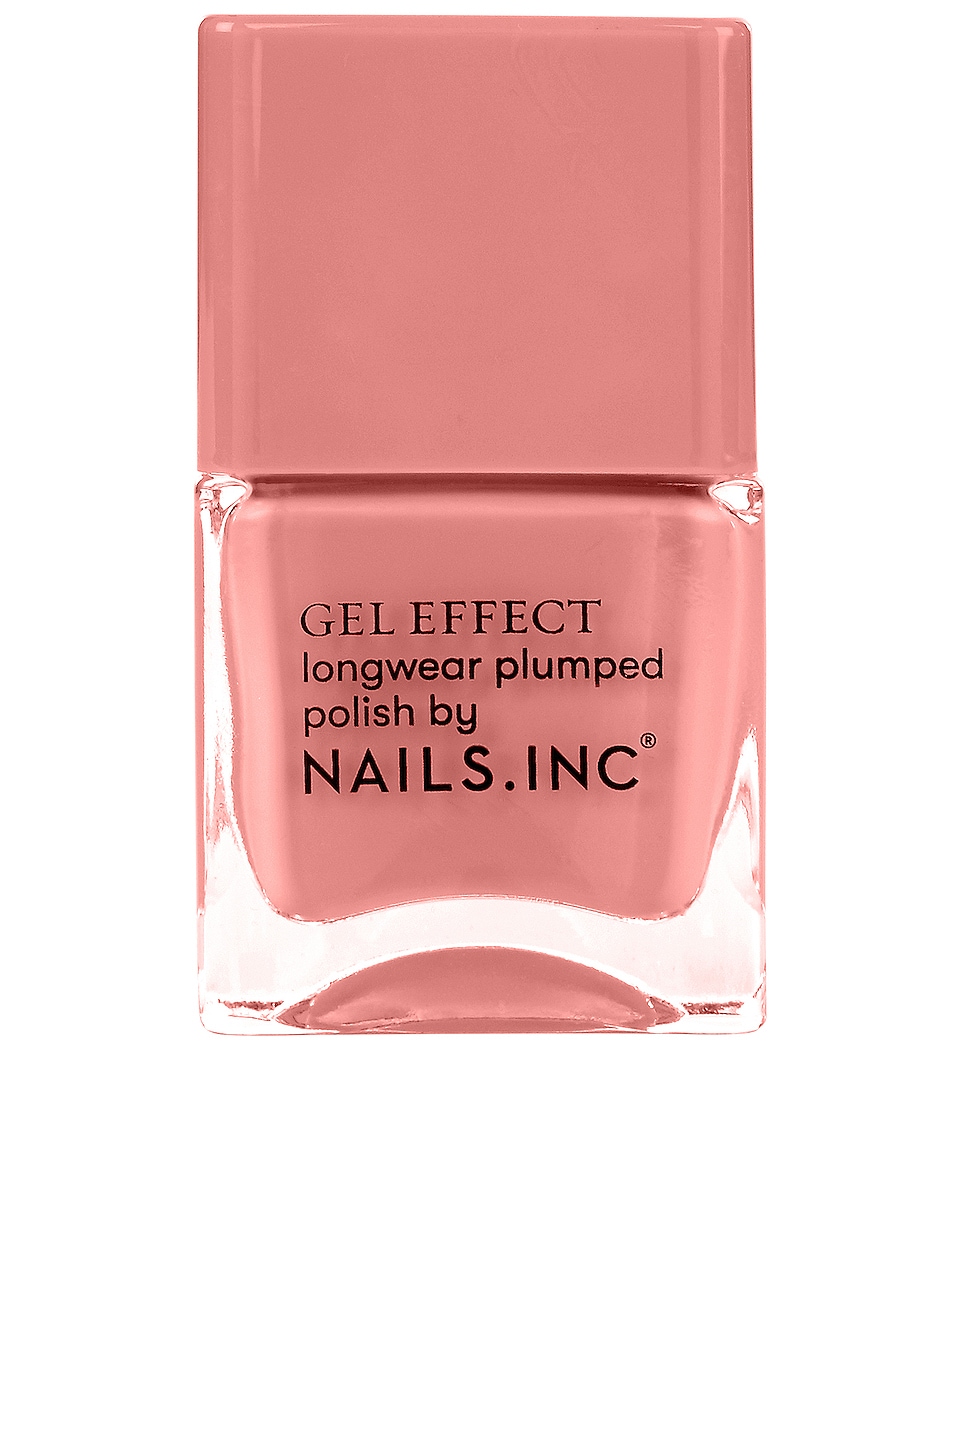 Nails.inc Gel Effect In Uptown